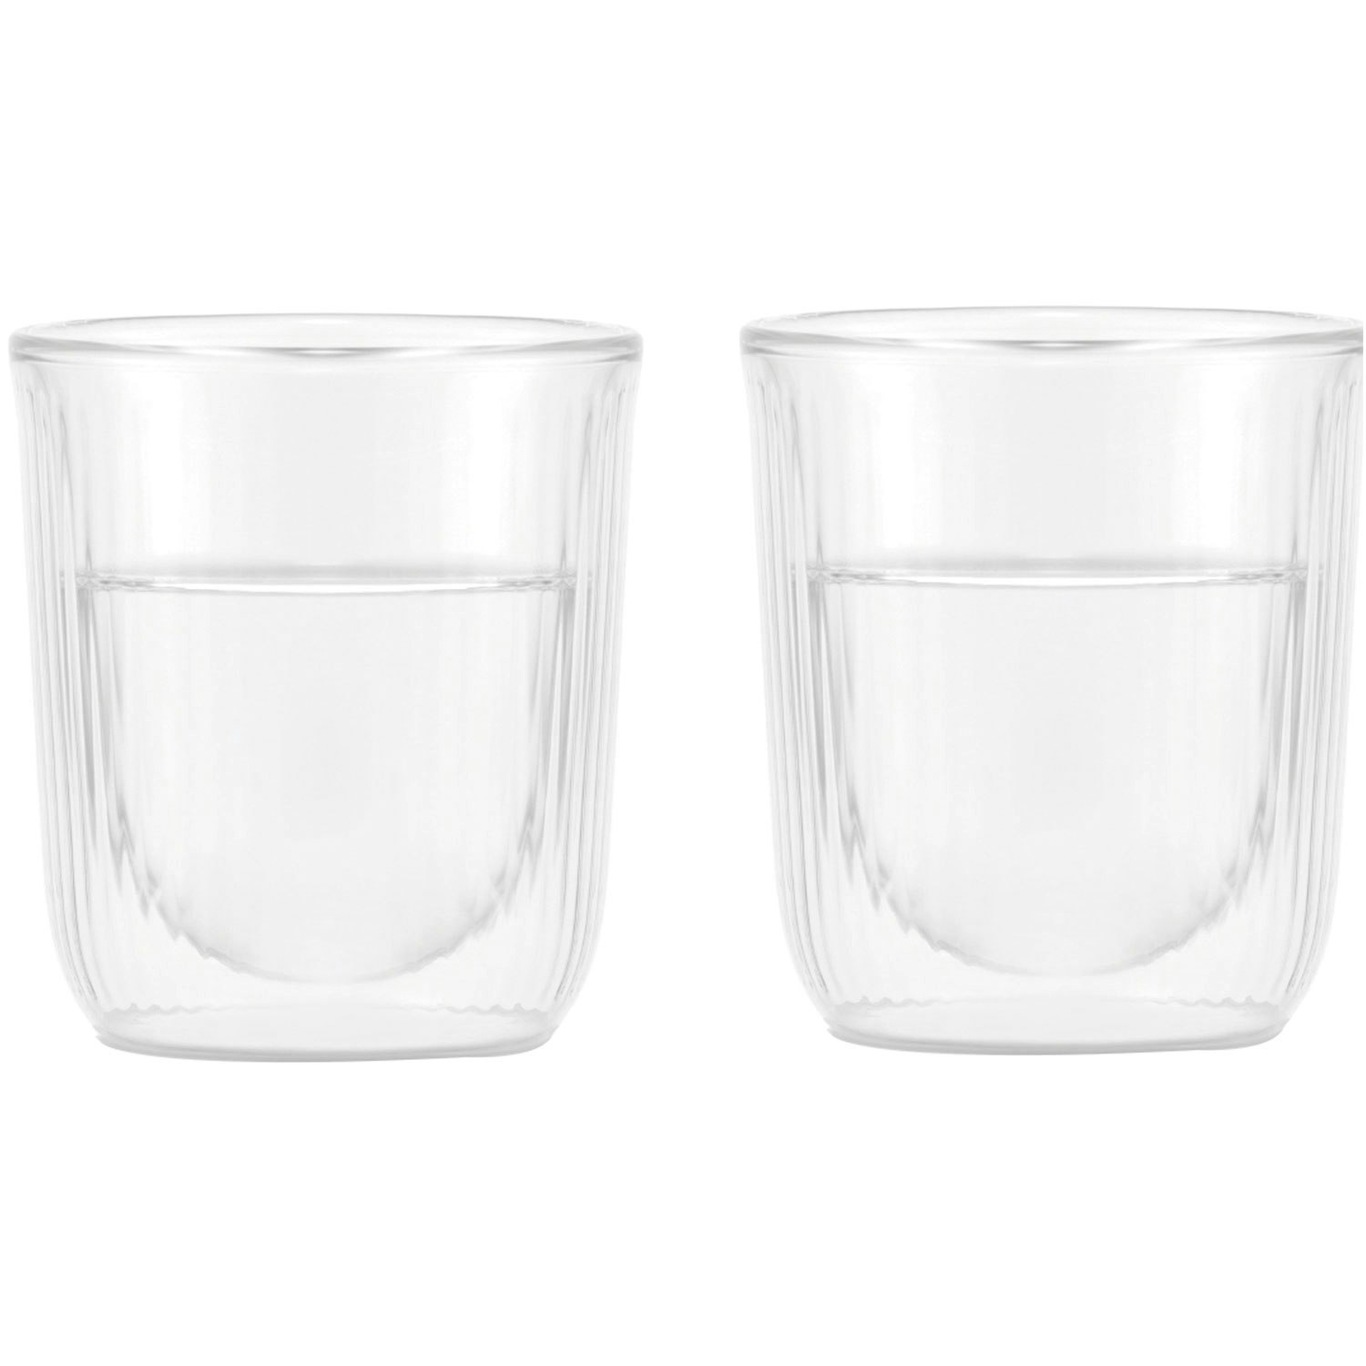 Douro Sake Gläser 2-er Set, 14,5 cl